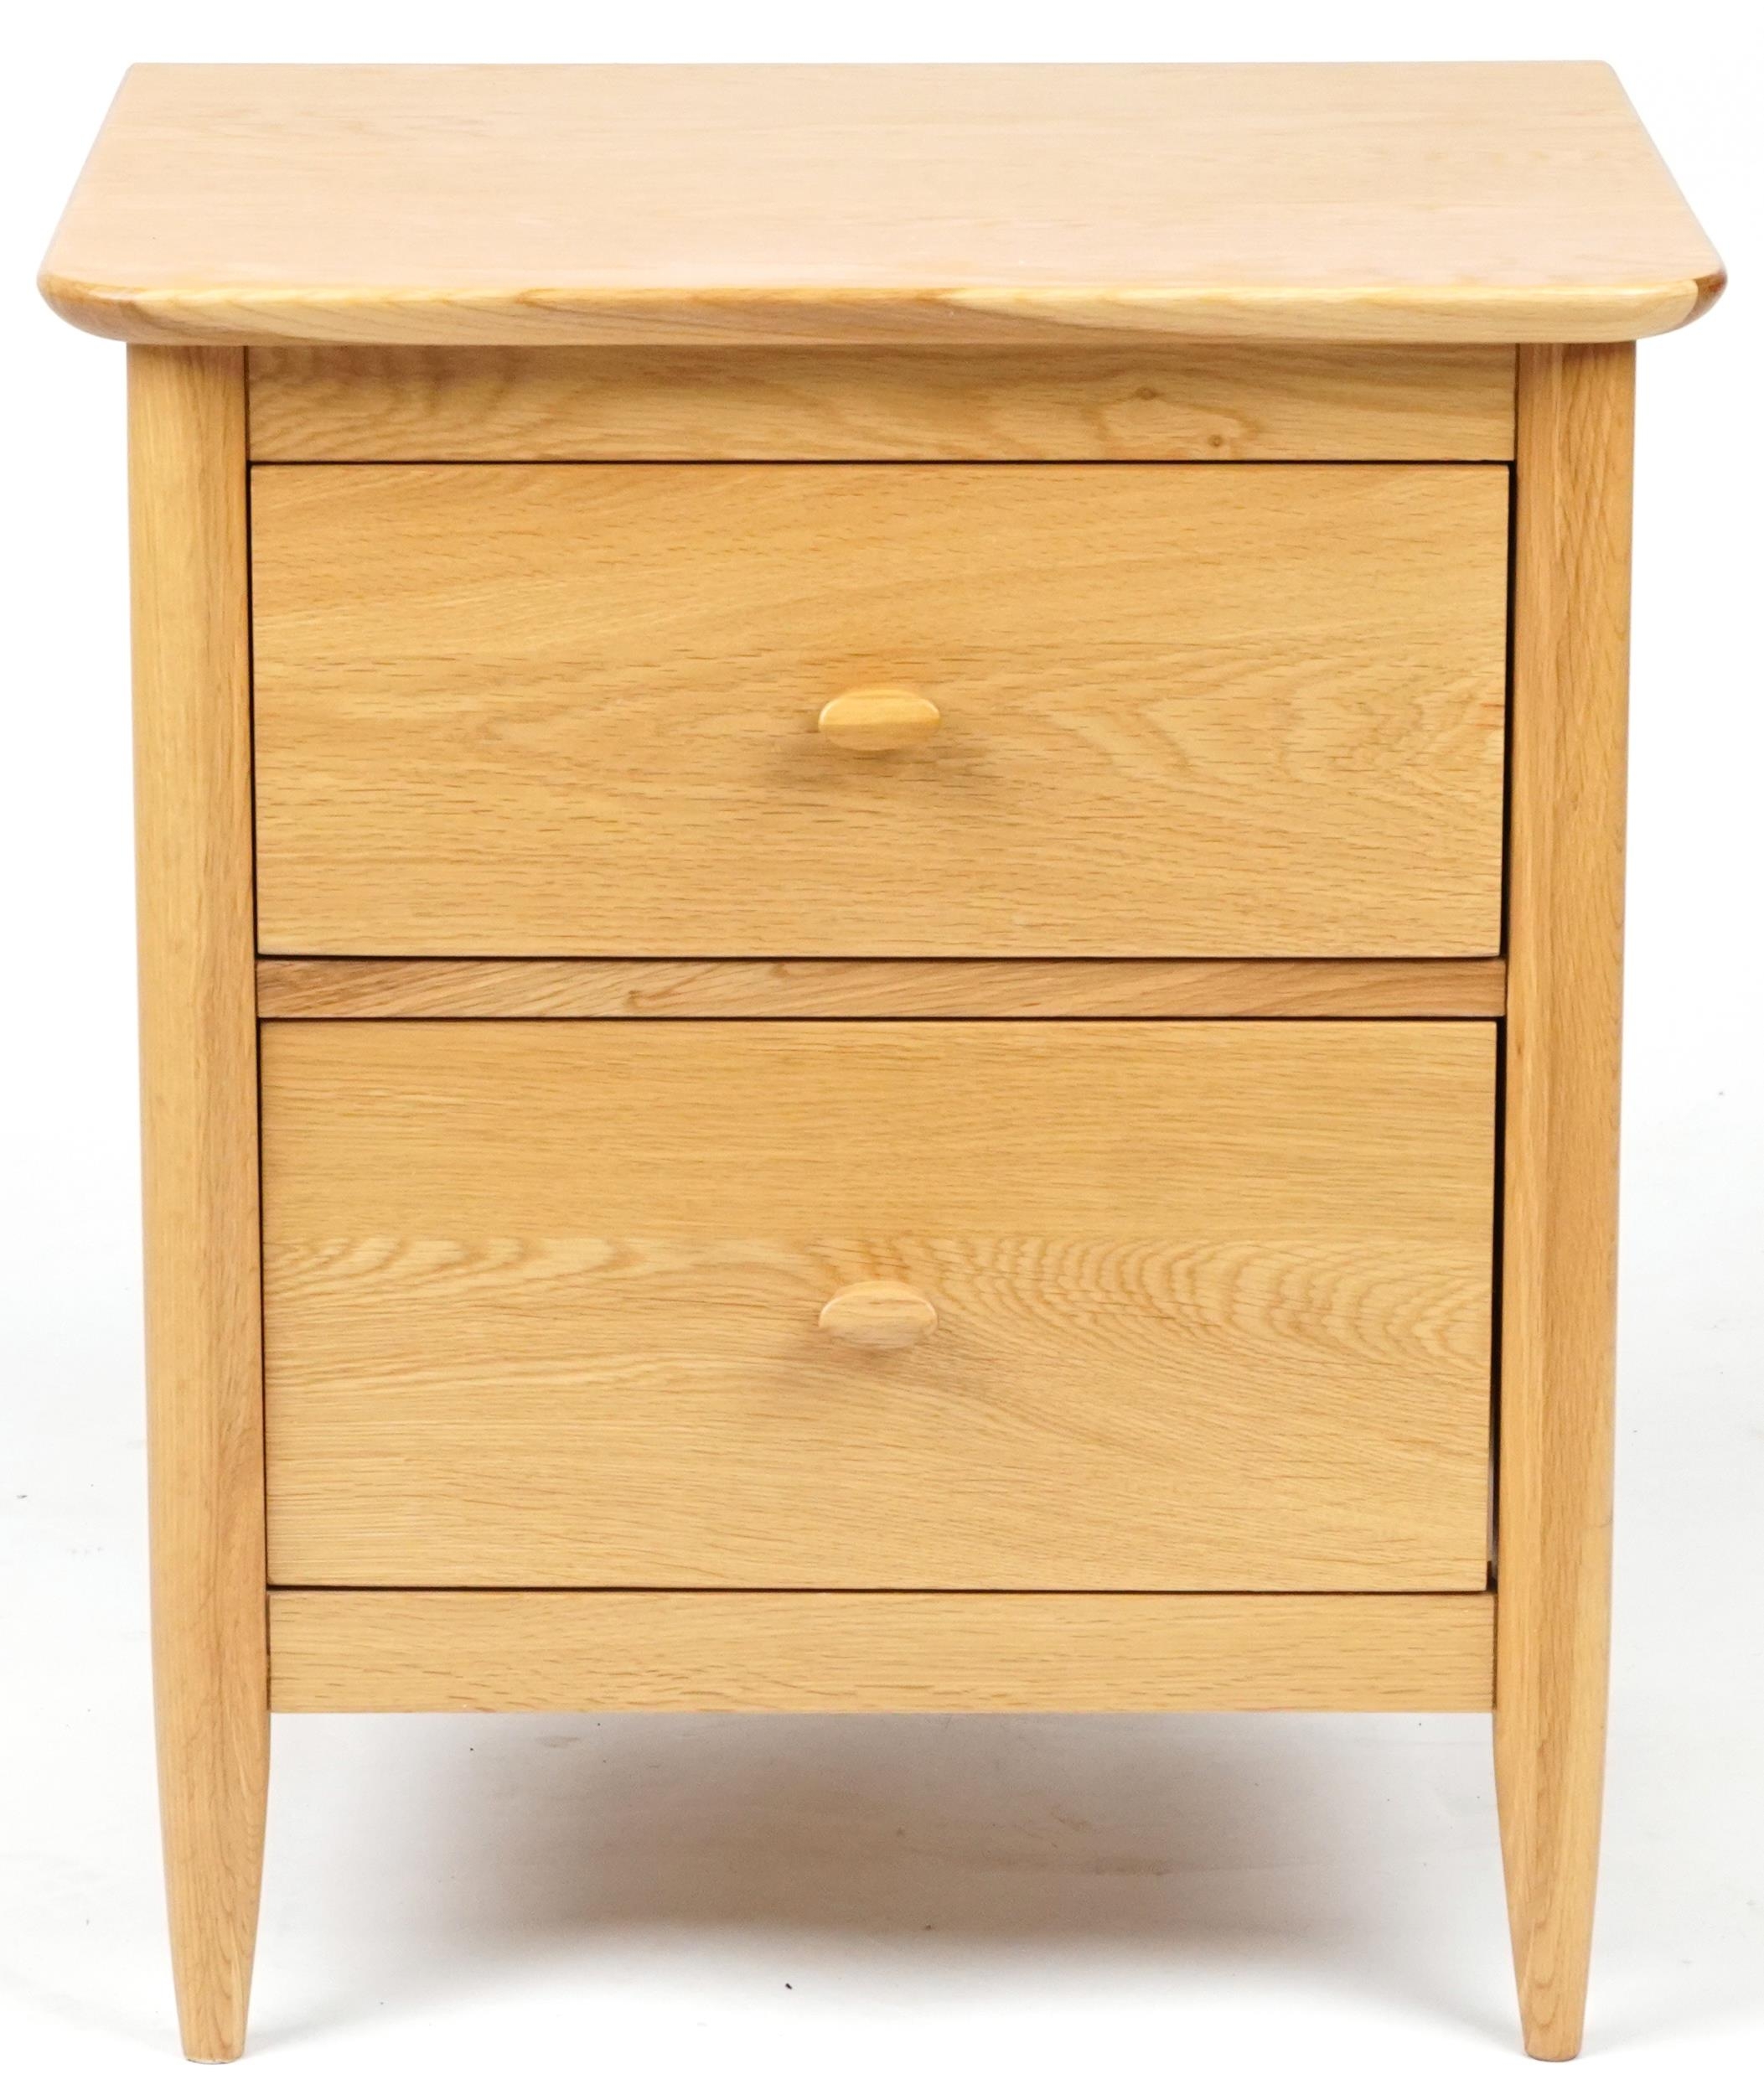 Ercol Teramo contemporary light oak two drawer bedside chest, 60cm H x 53cm W x 47cm D - Image 2 of 6